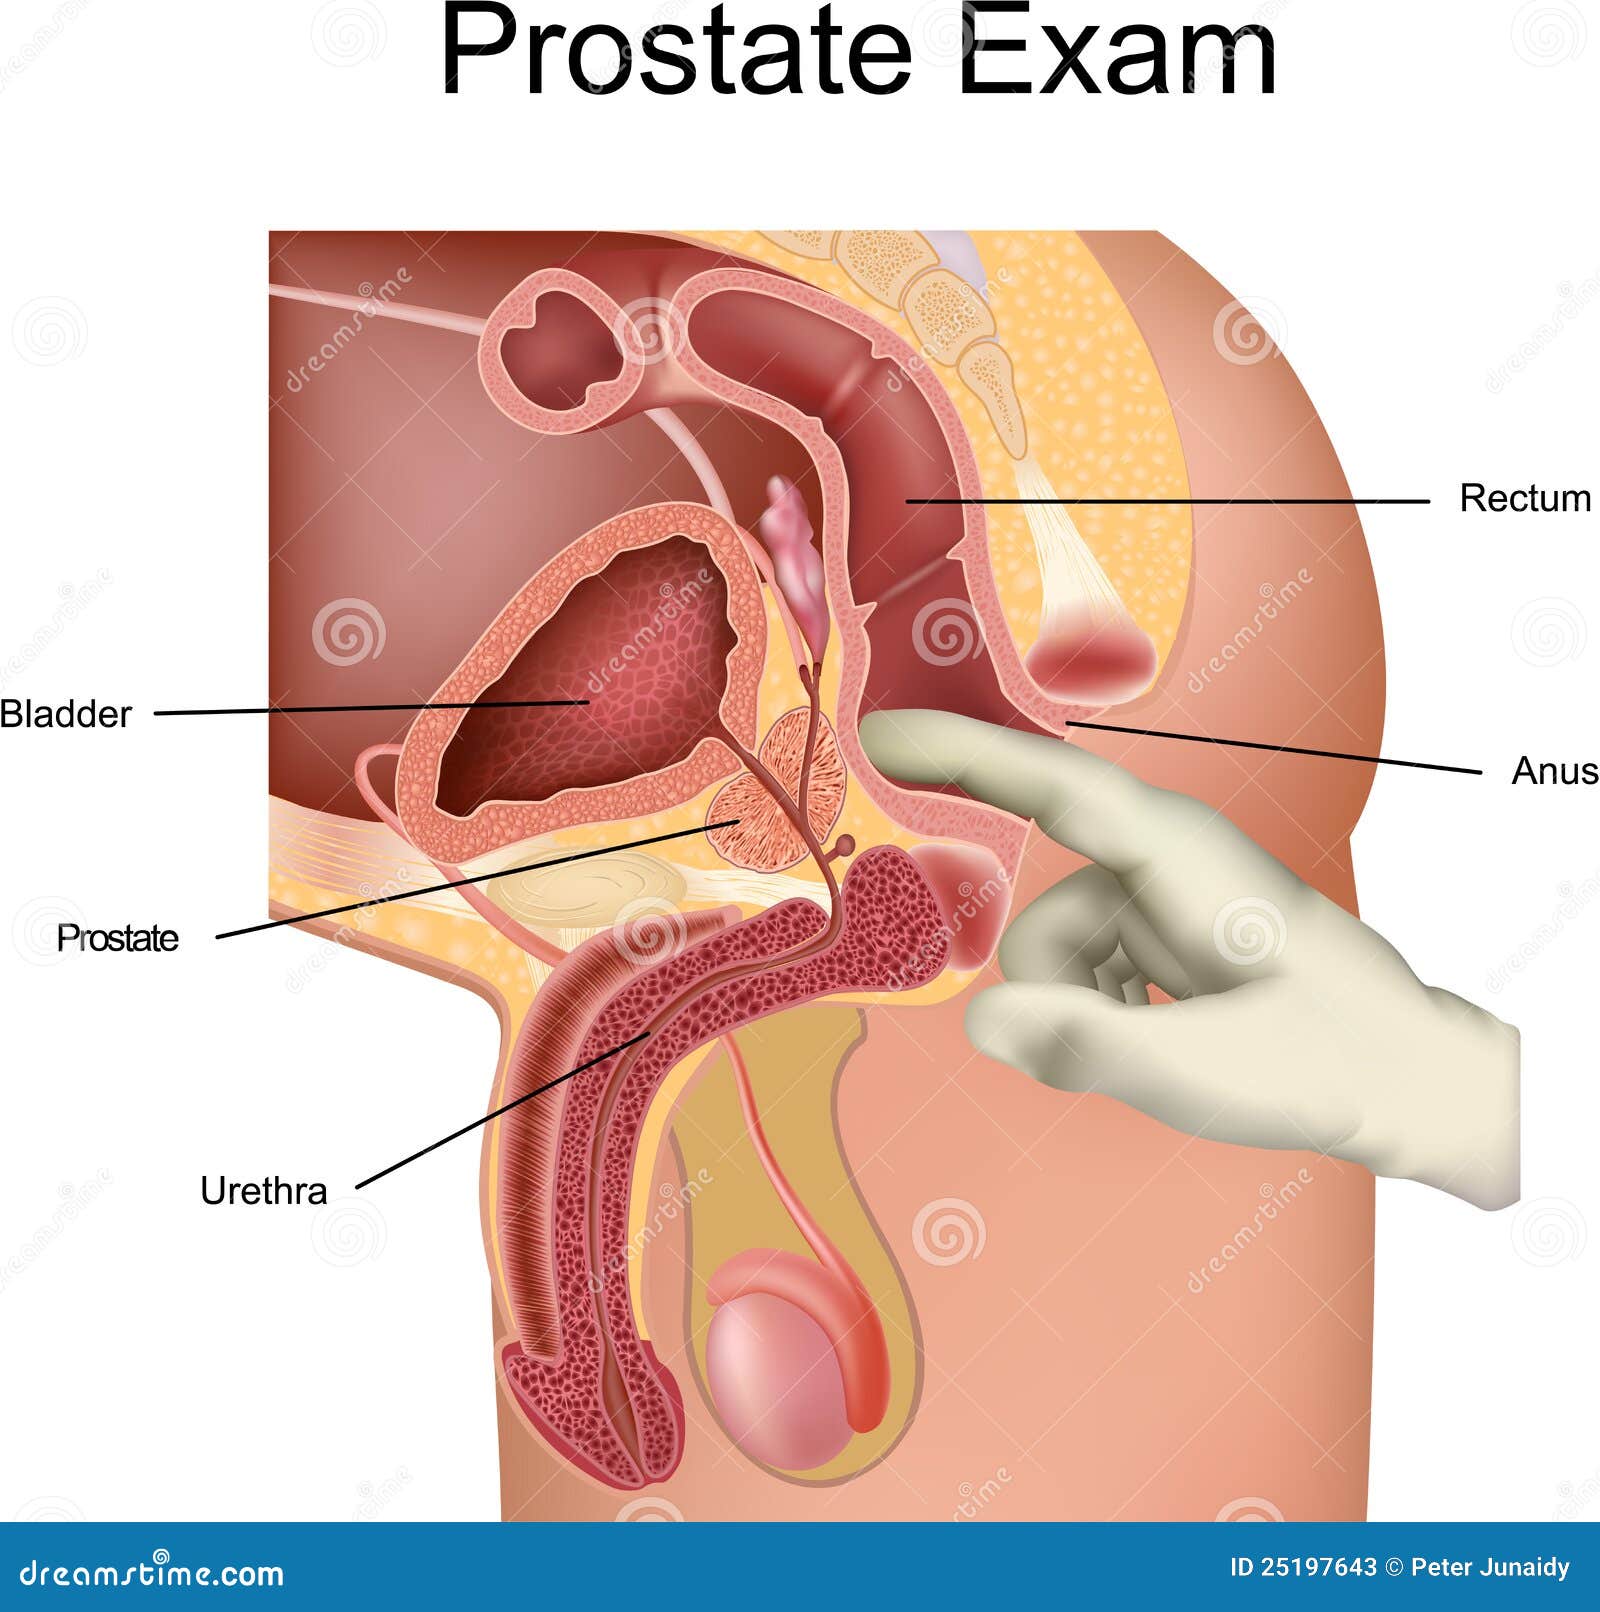 Prostate Exam stock vector. Illustration of exam, medical - 25197643